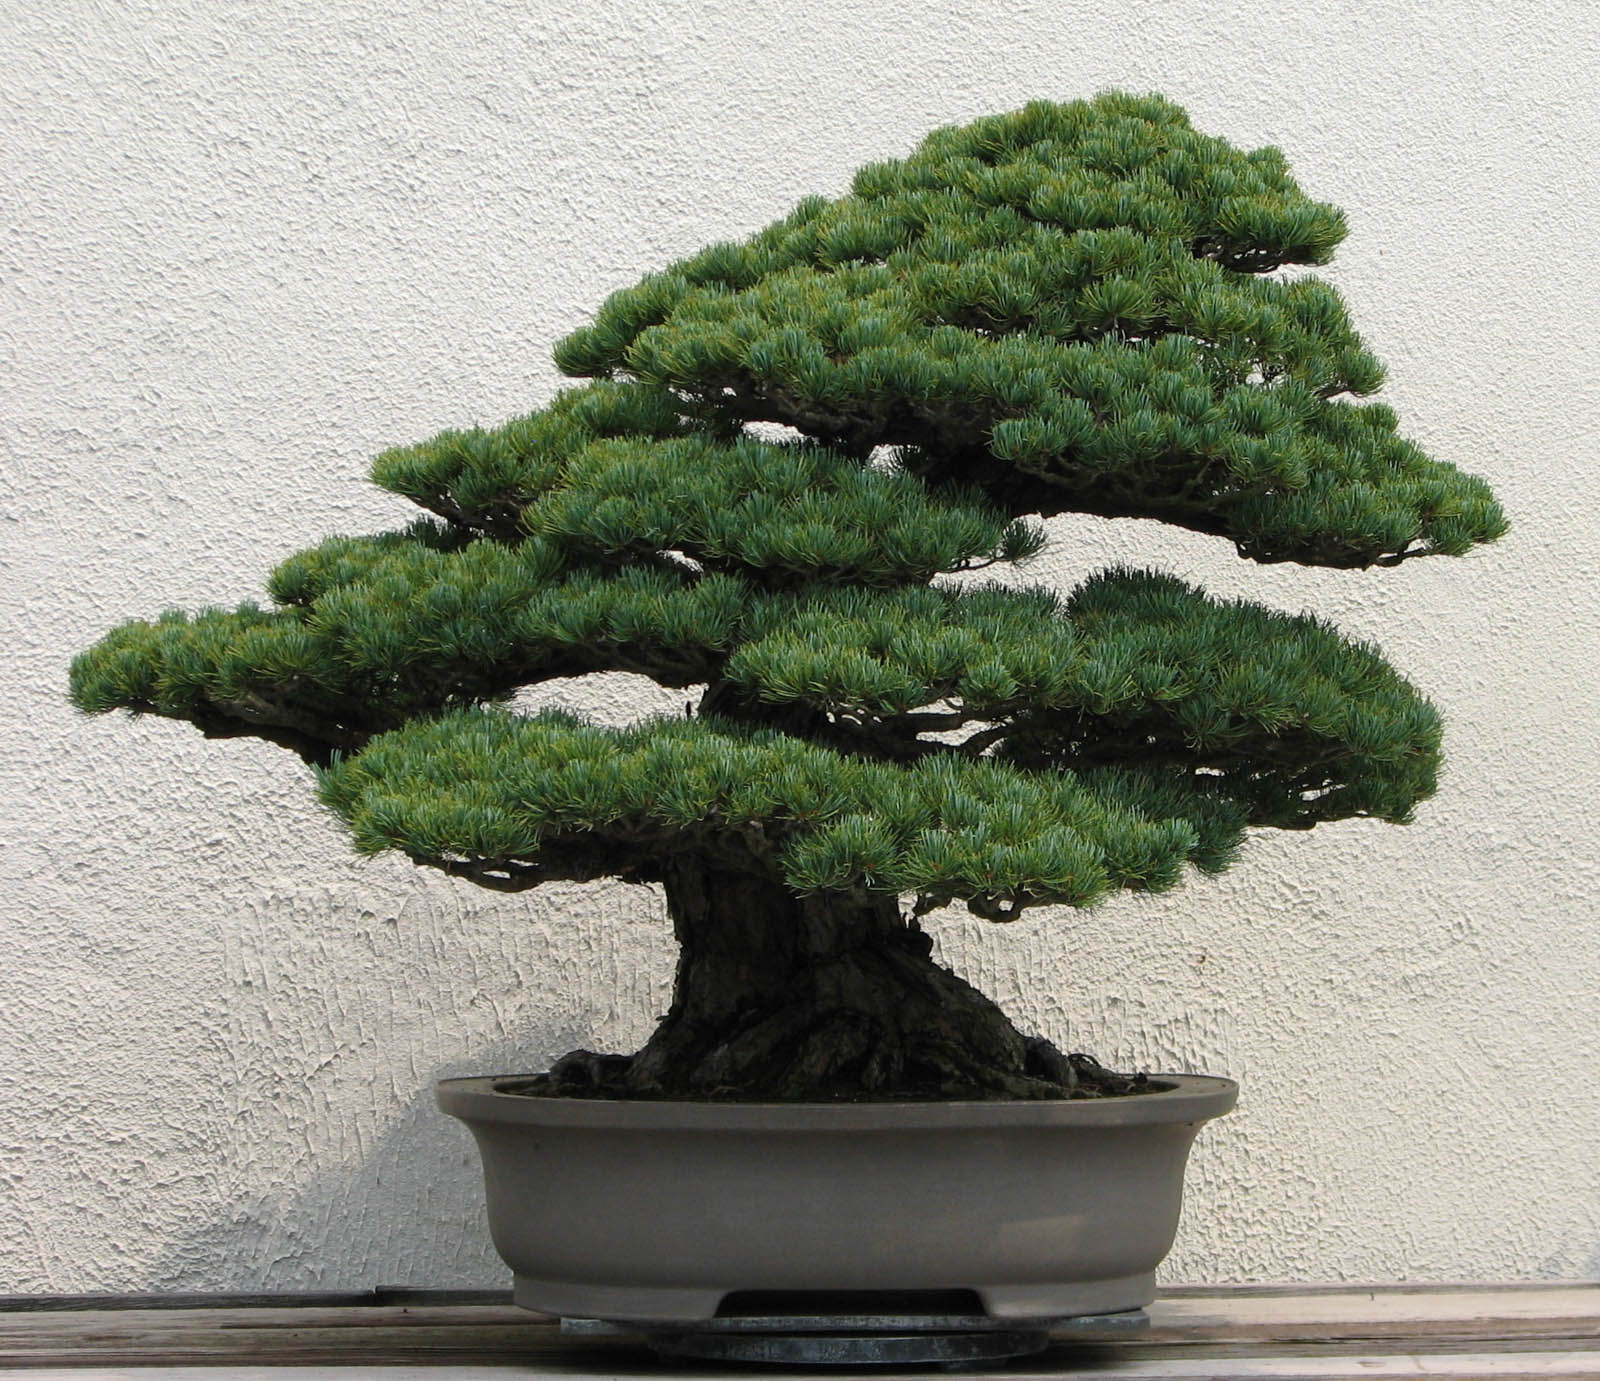 The Art of Japanese Bonsai  Trees  Craftsmanship Magazine